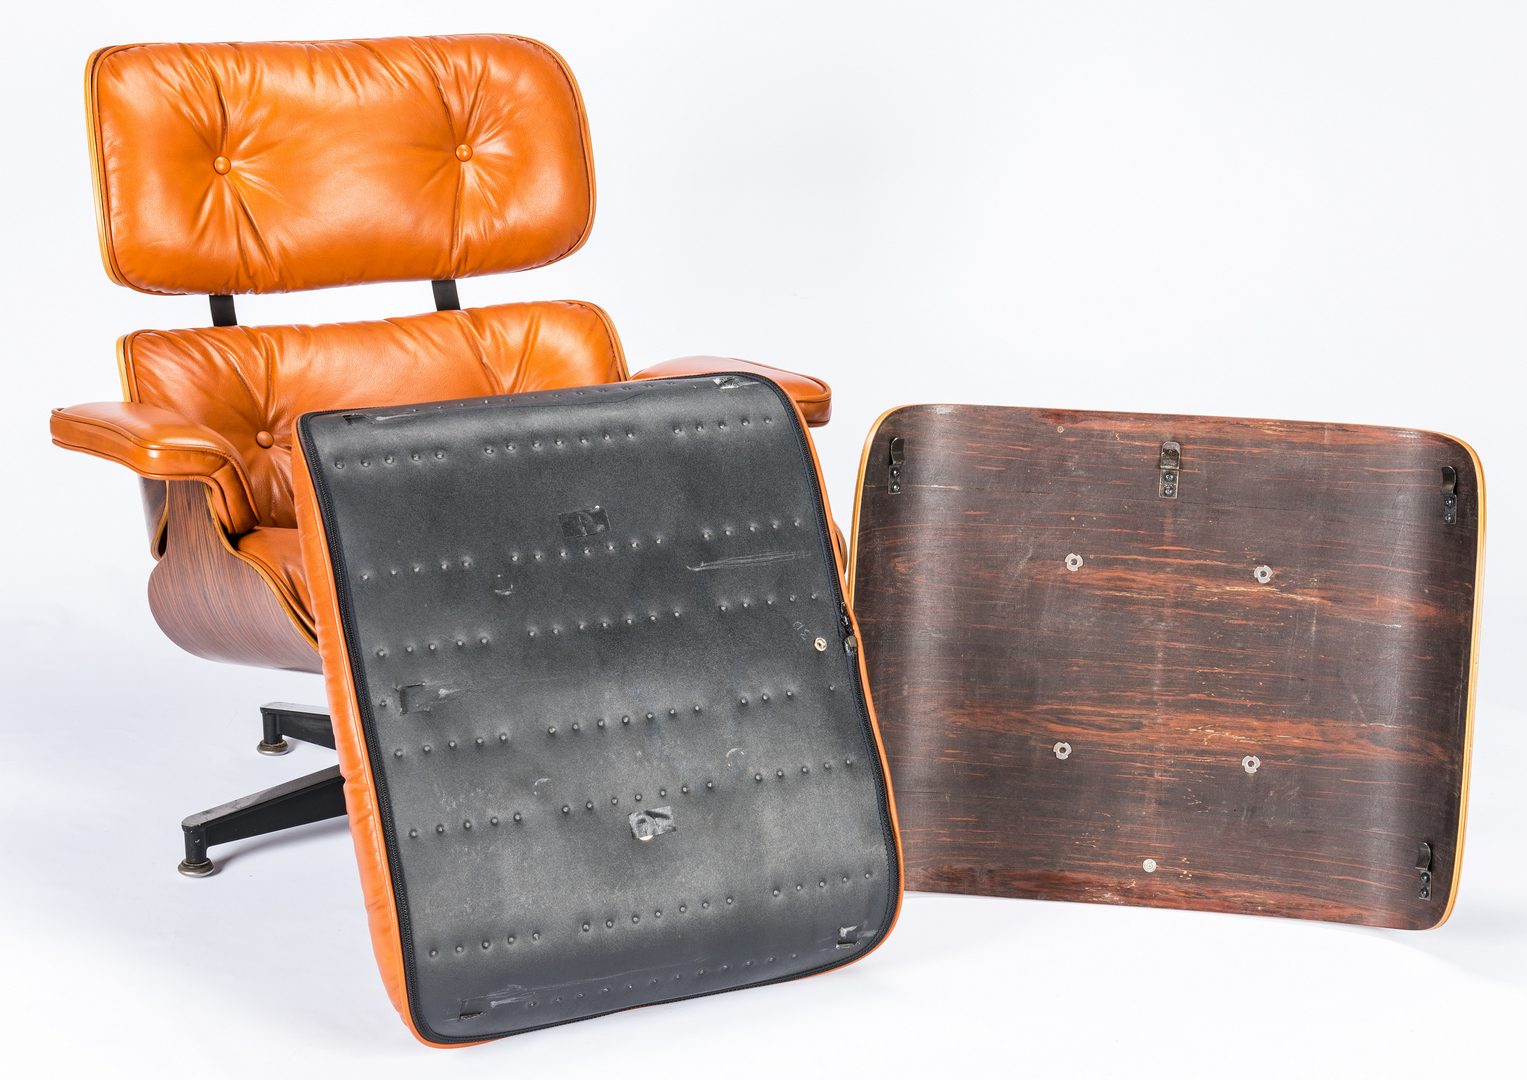 Lot 559: Eames Lounge Chair & Ottoman by Herman Miller